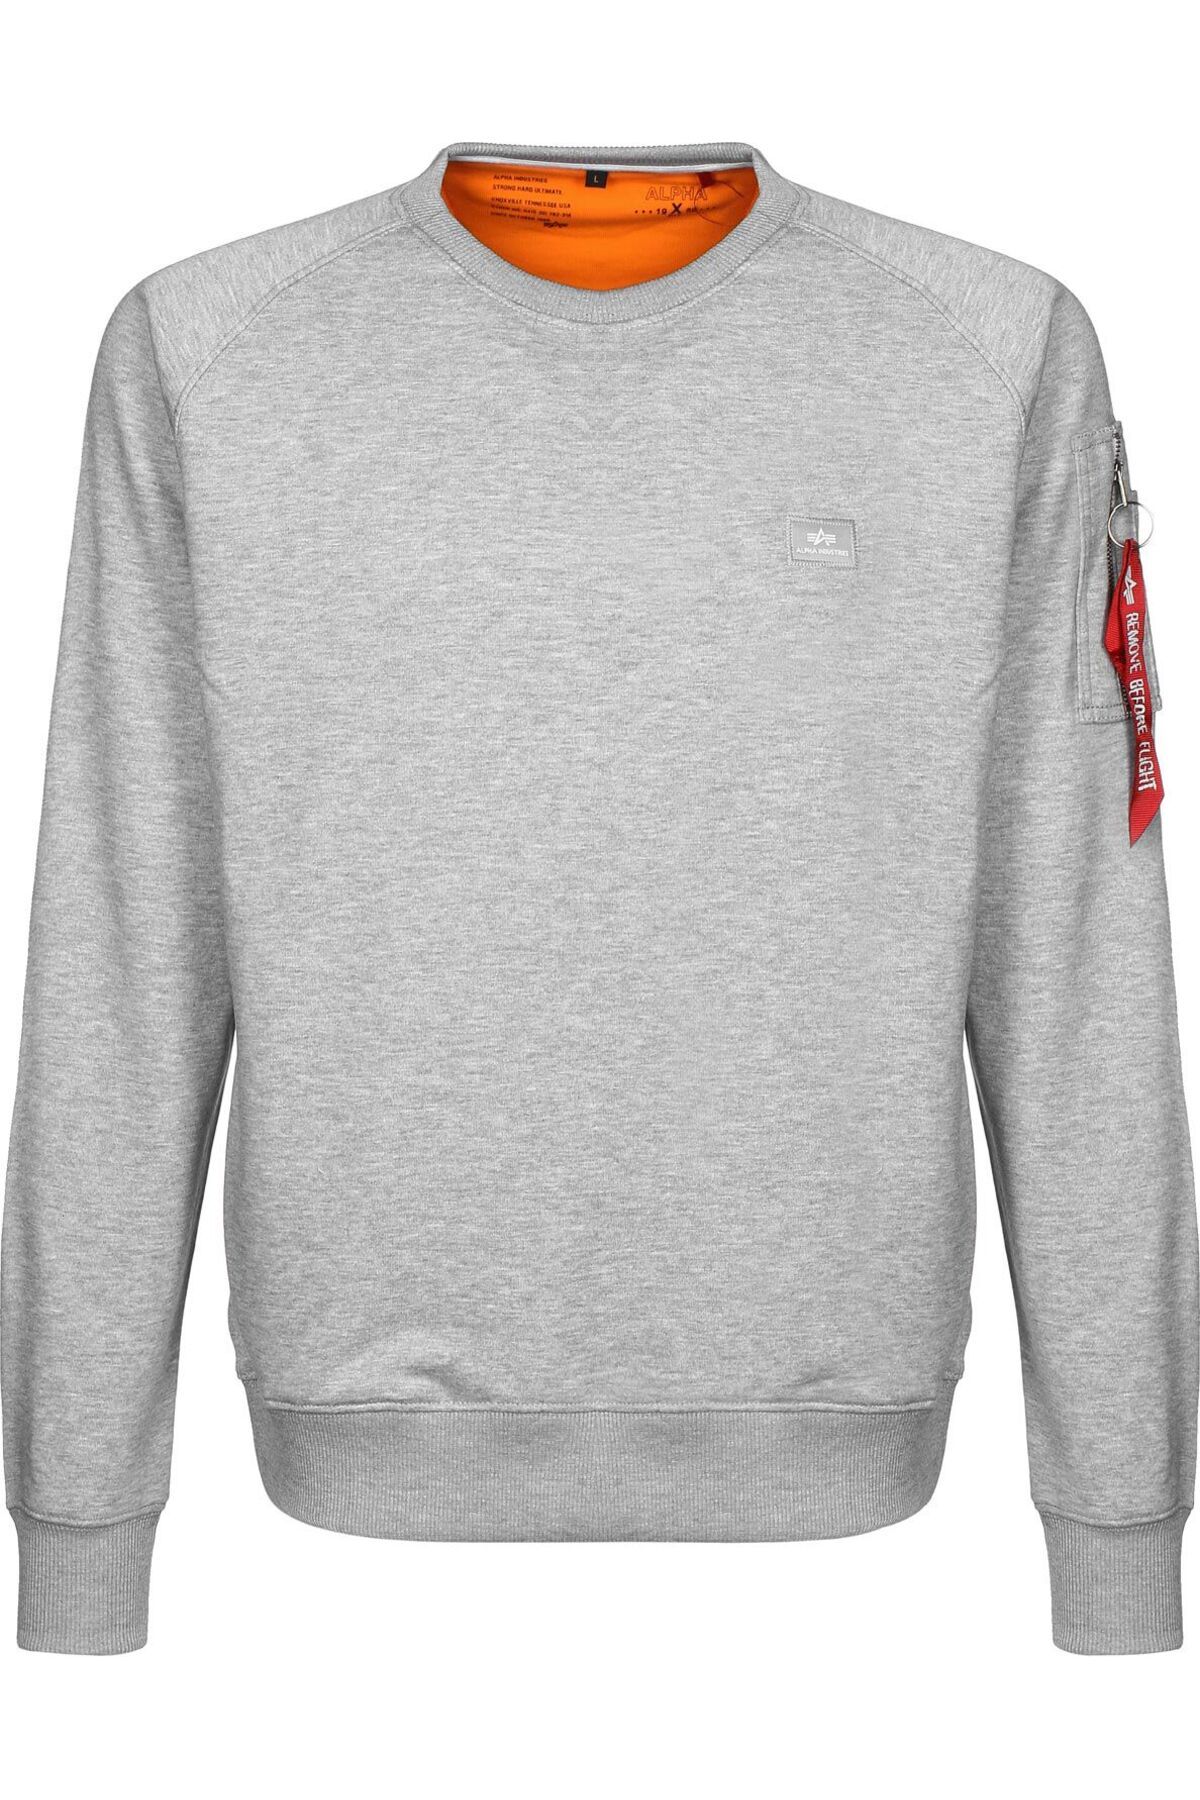 fit Regular - - Sweatshirt Trendyol Gray Industries Alpha -